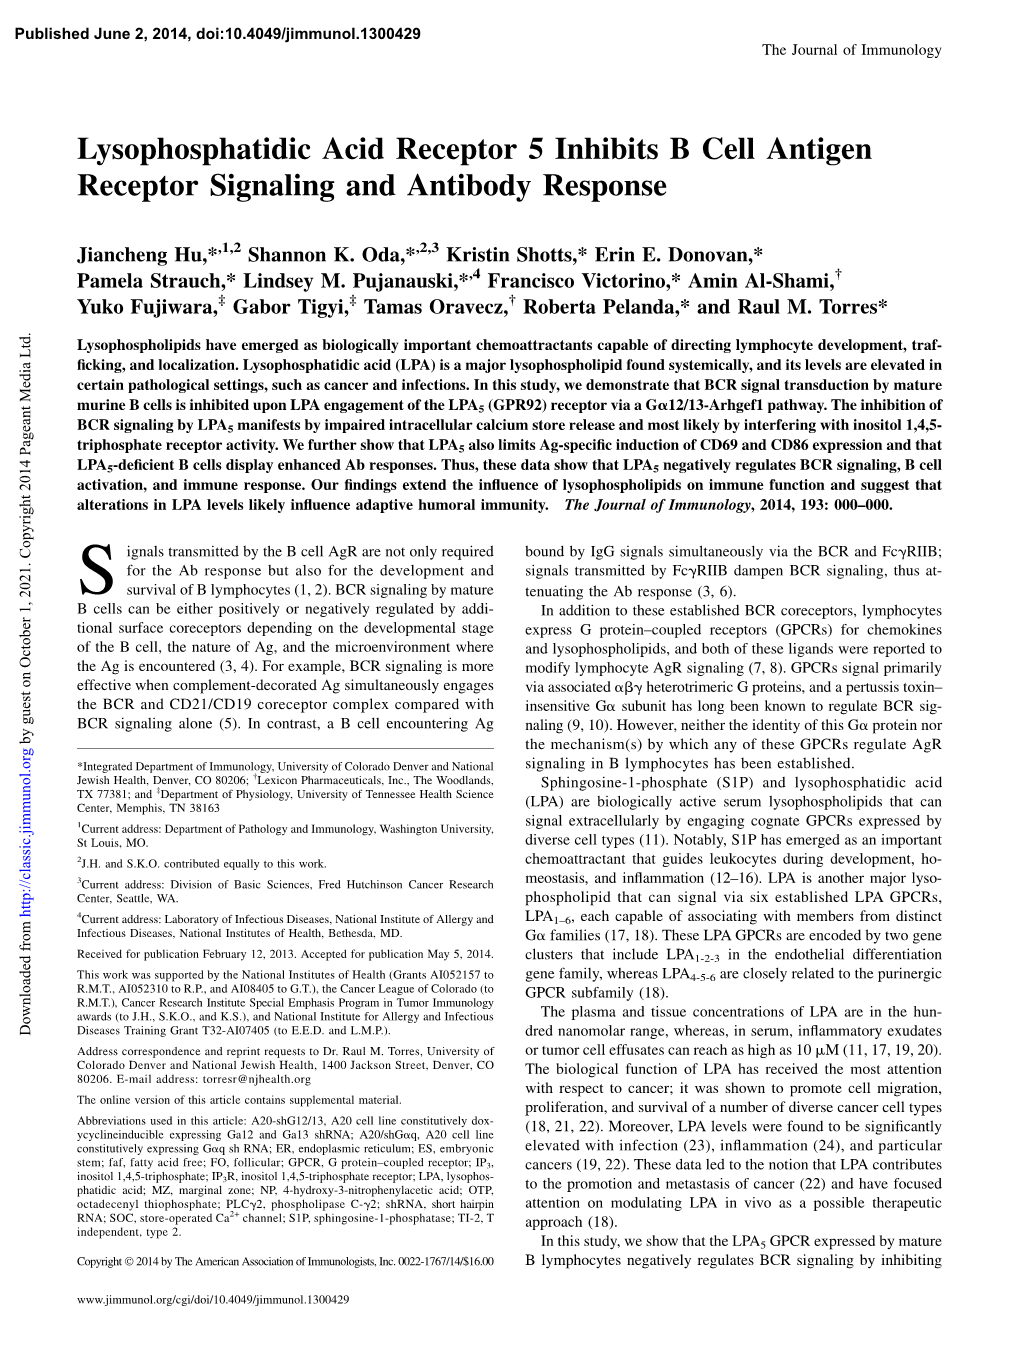 Antibody Response Cell Antigen Receptor Signaling And